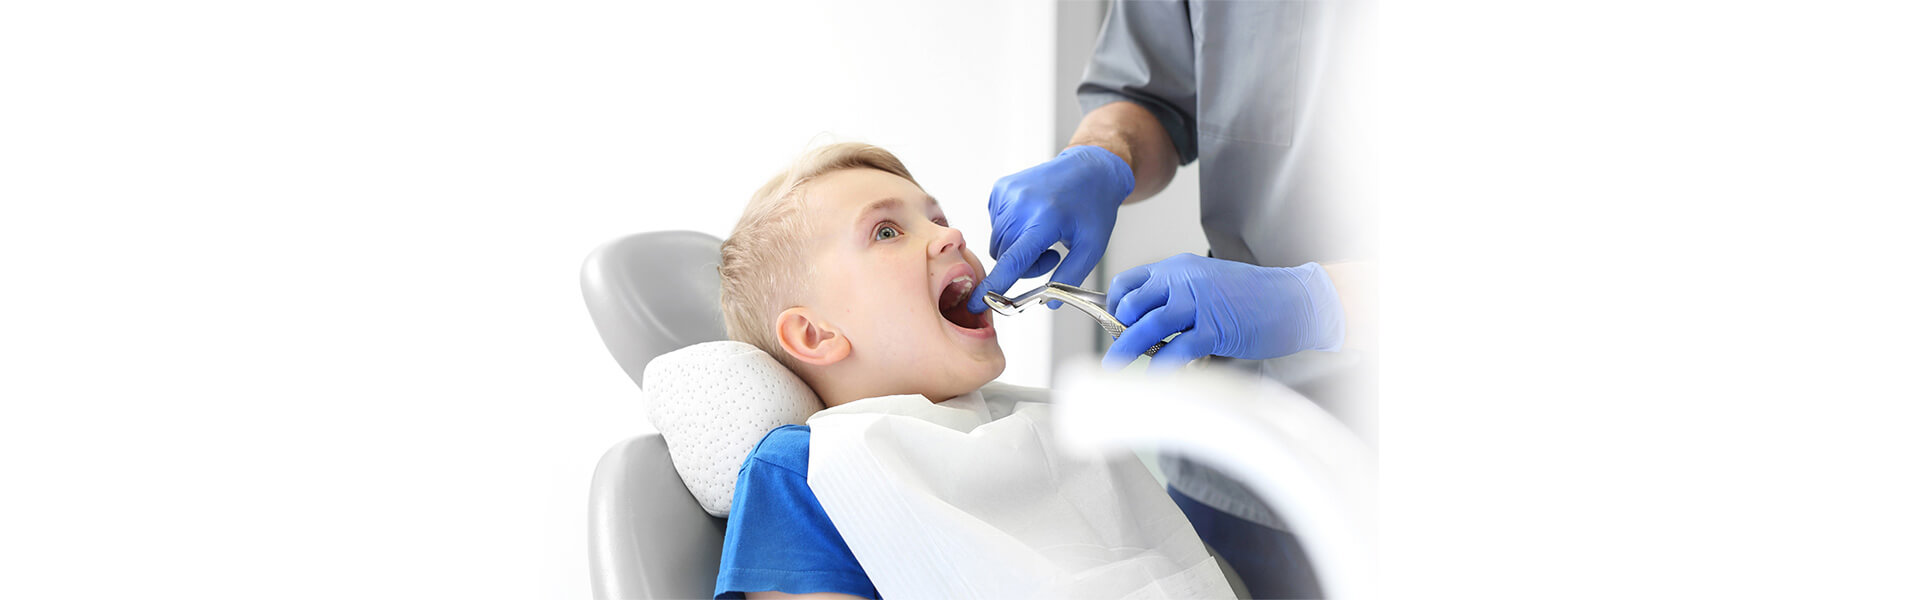 dentist performing procedure on child